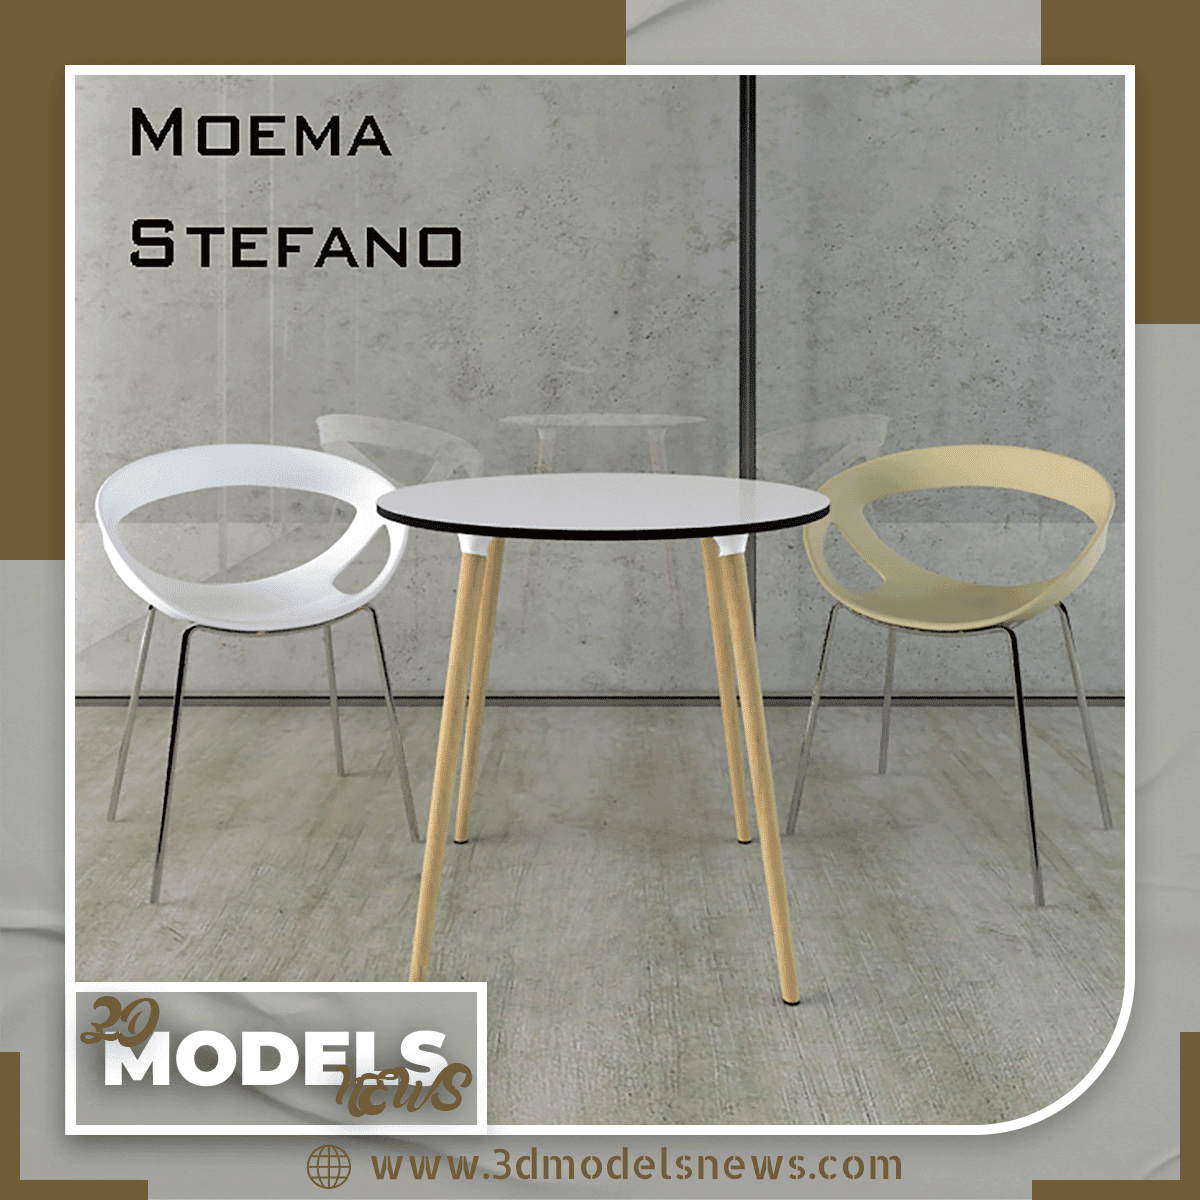 GABER Stefano Moema Chair Model